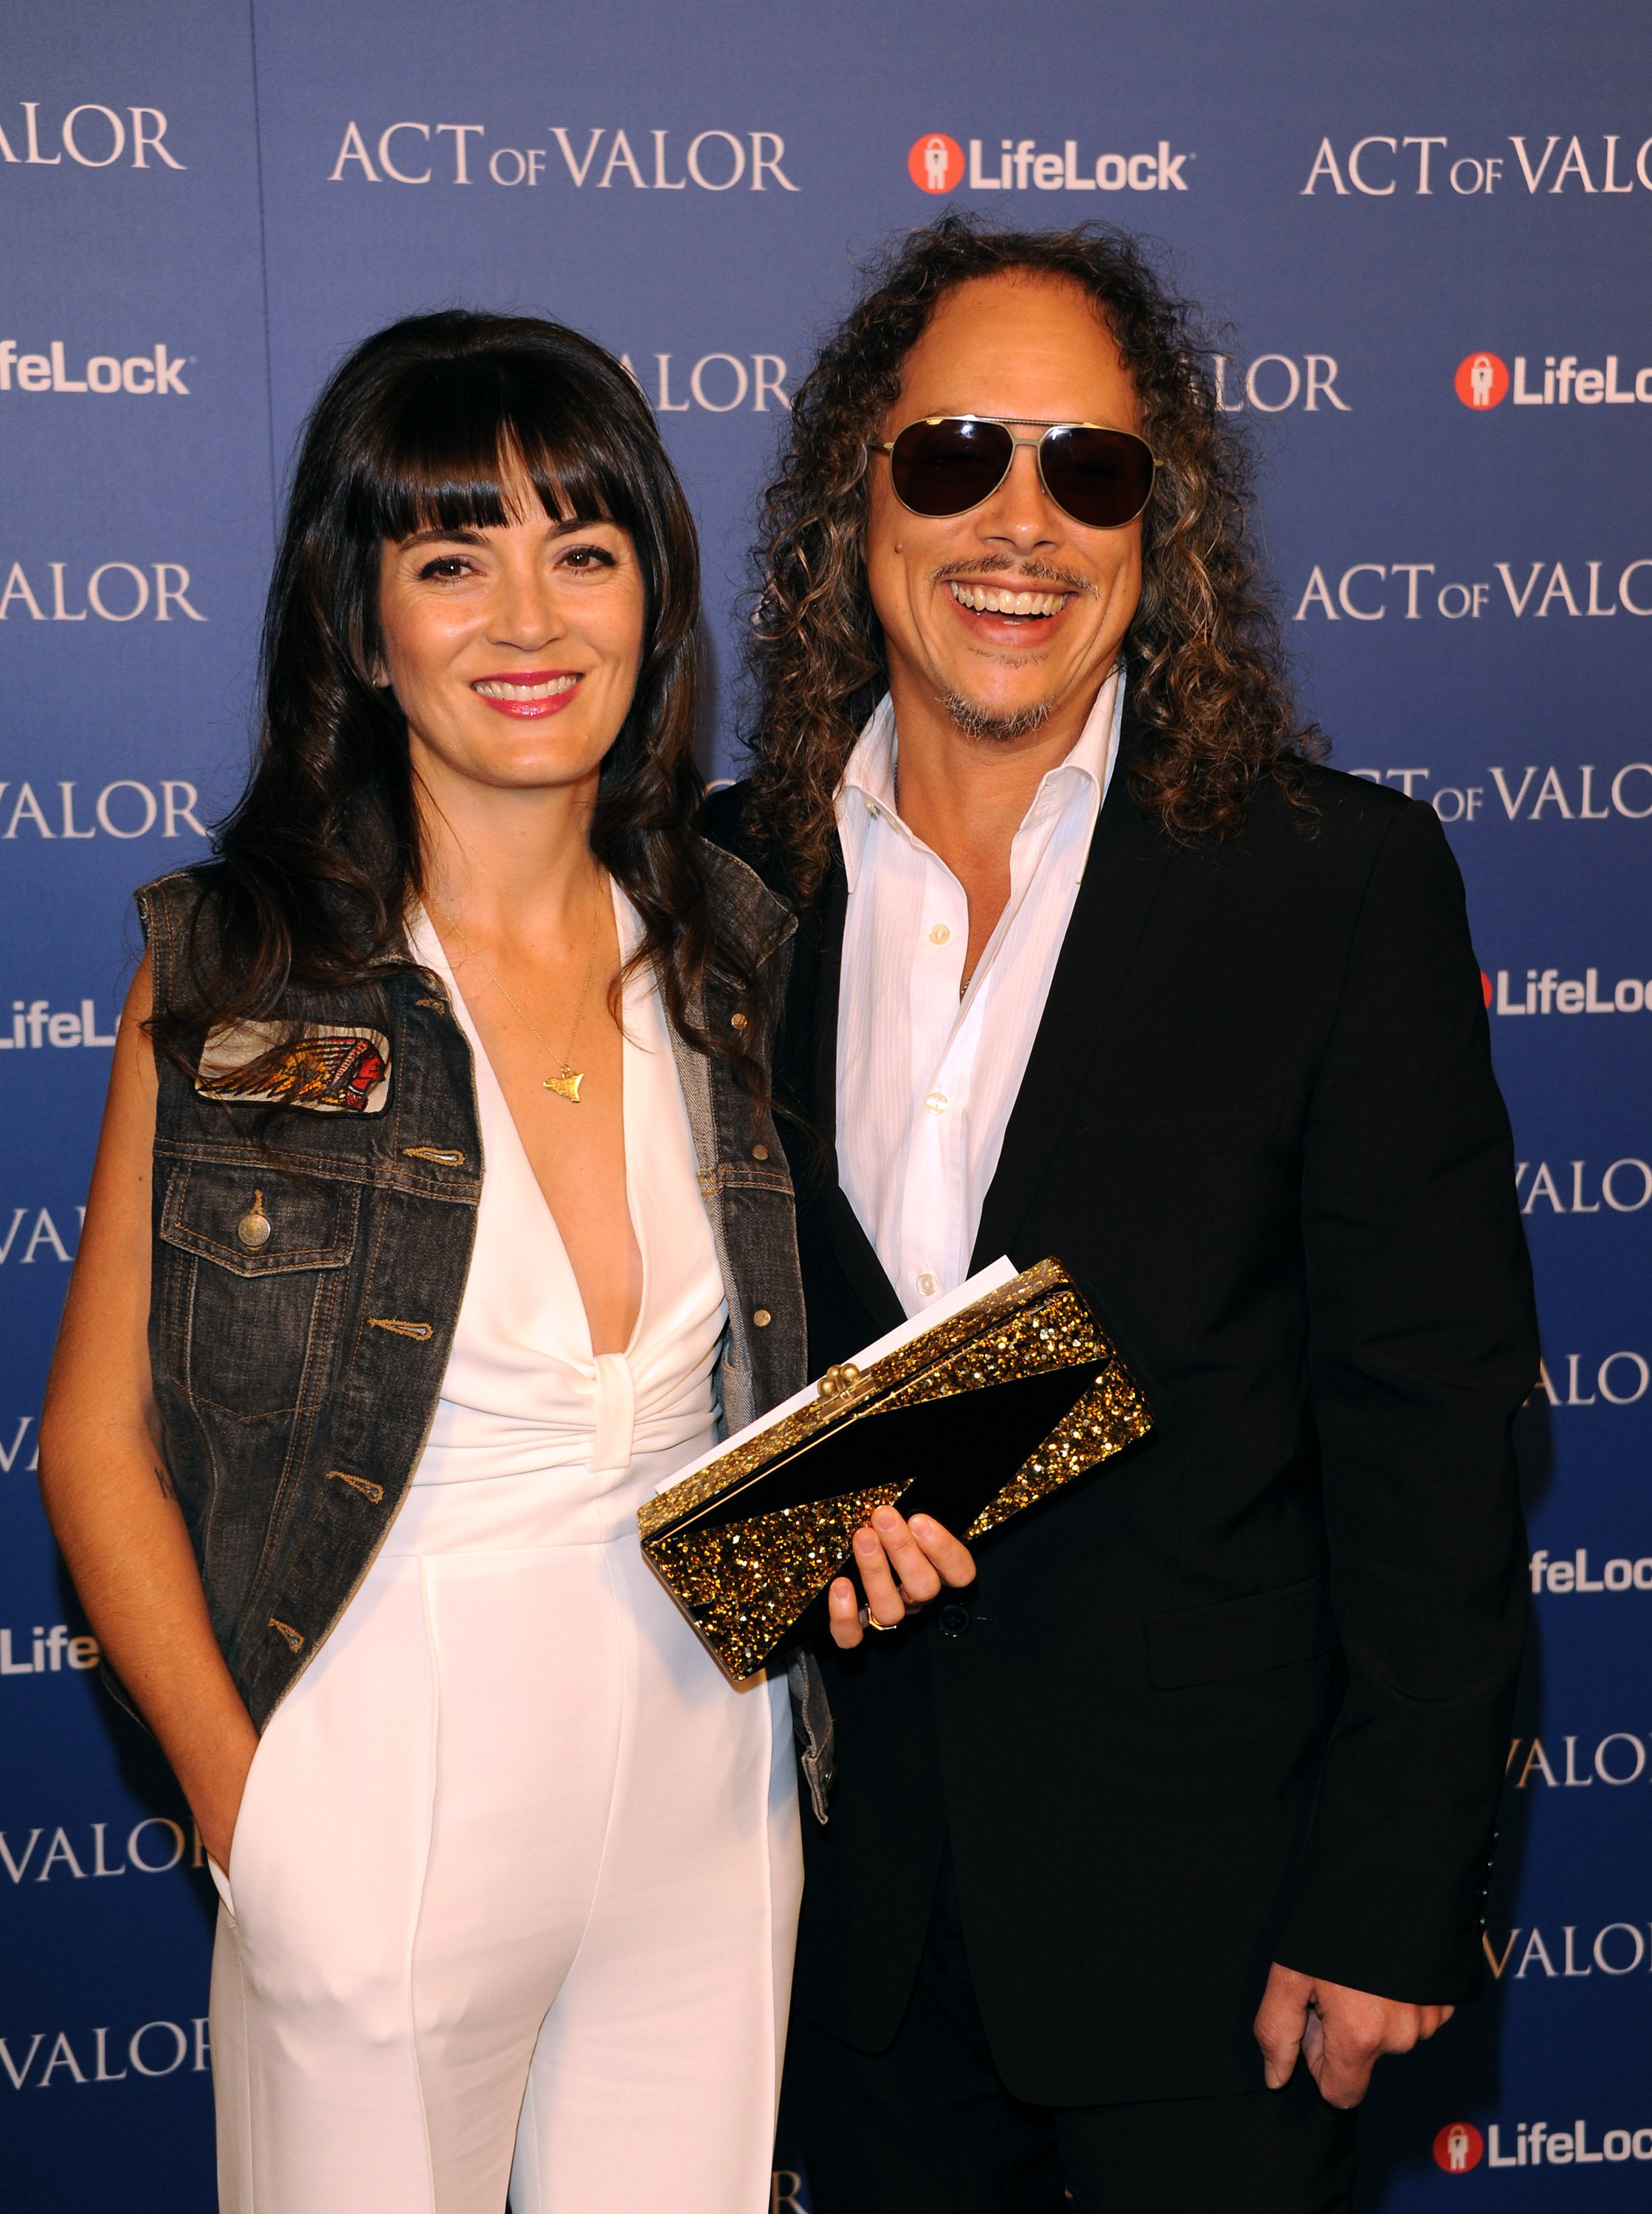 Kirk Hammett and his wife Lani Hammett co-wrote 2 songs